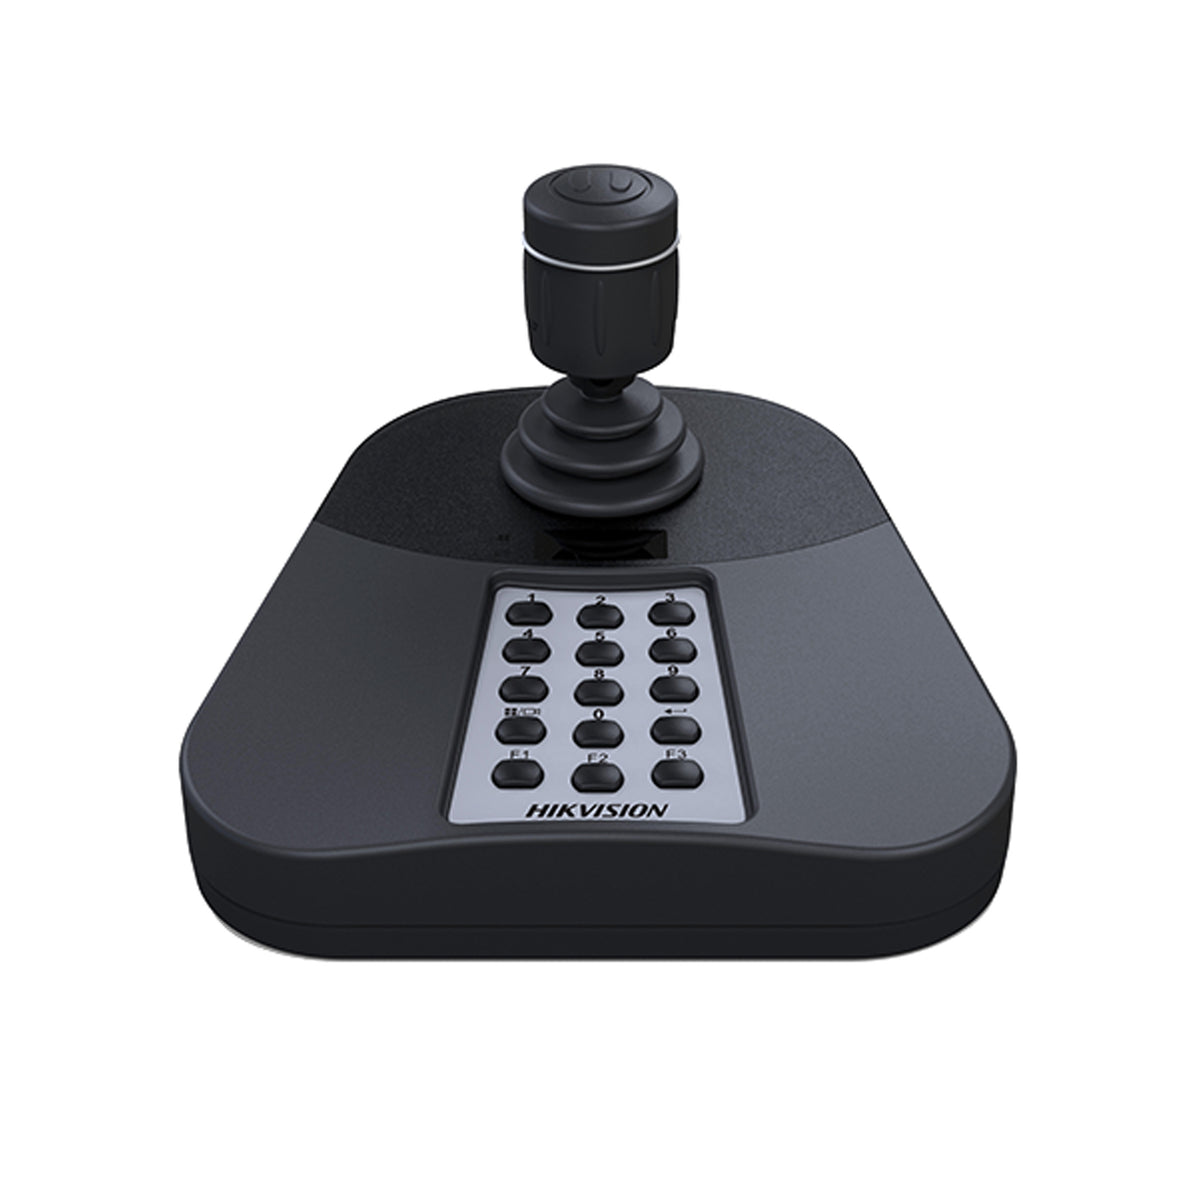 Hikvision DS-1005KI USB PTZ Keyboard Controller for NVRs, DVRs, VMS